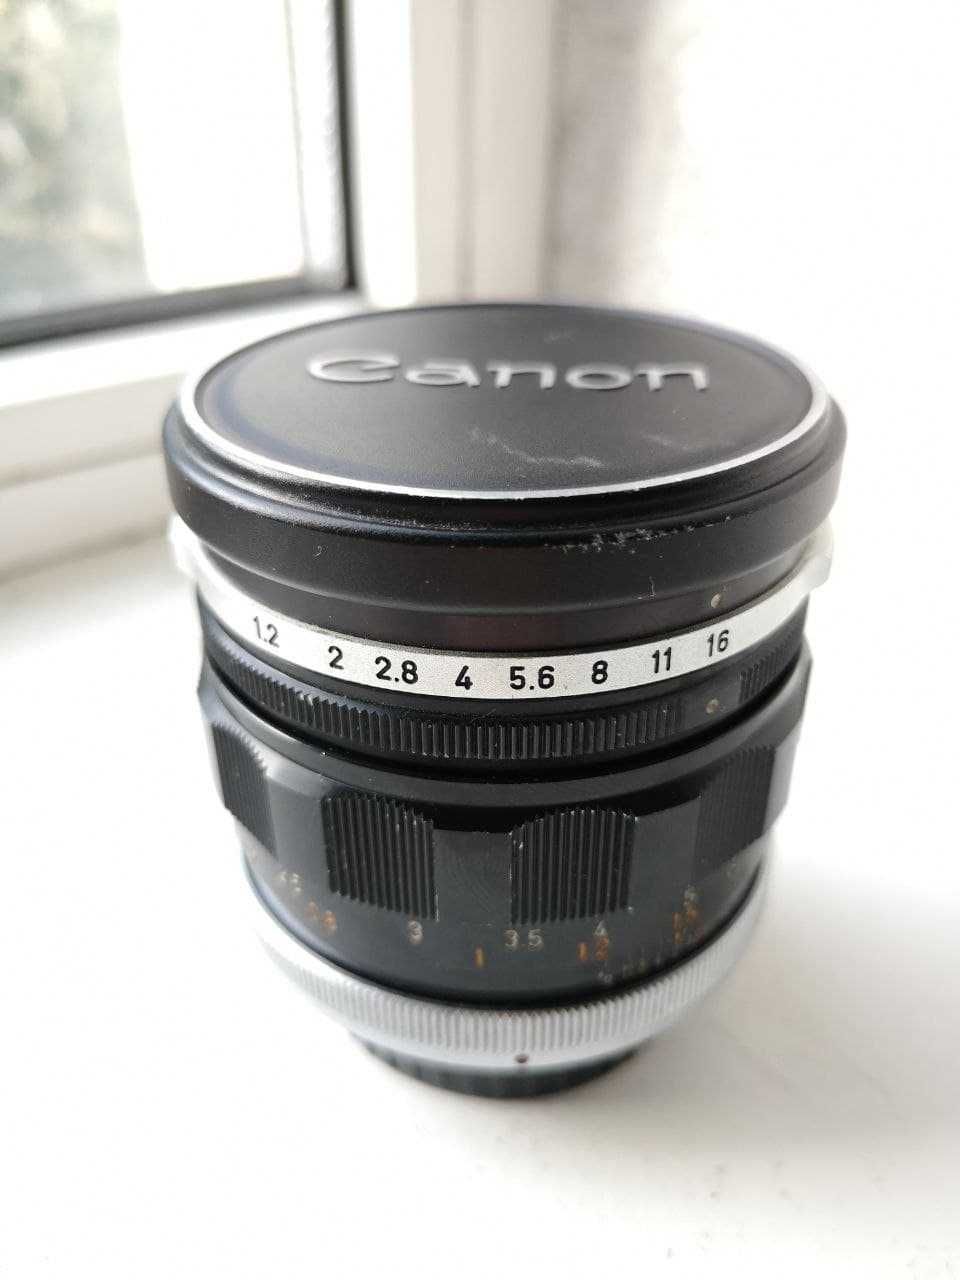 Объектив Canon FL 58mm f/ 1.2